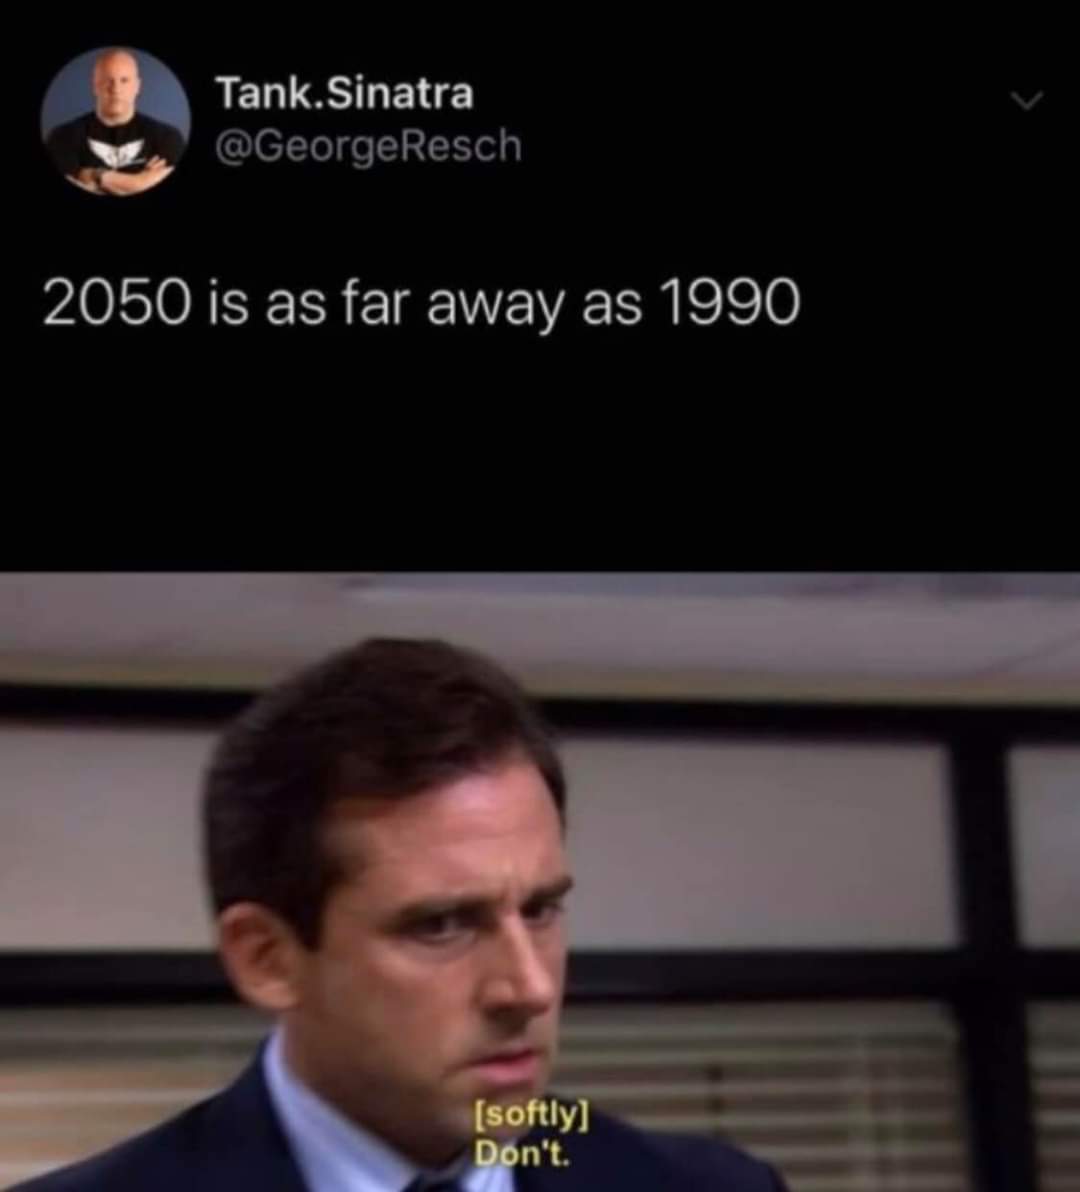 2050 1990 meme - Tant Tank. Sinatra 2050 is as far away as 1990 softly Don't.